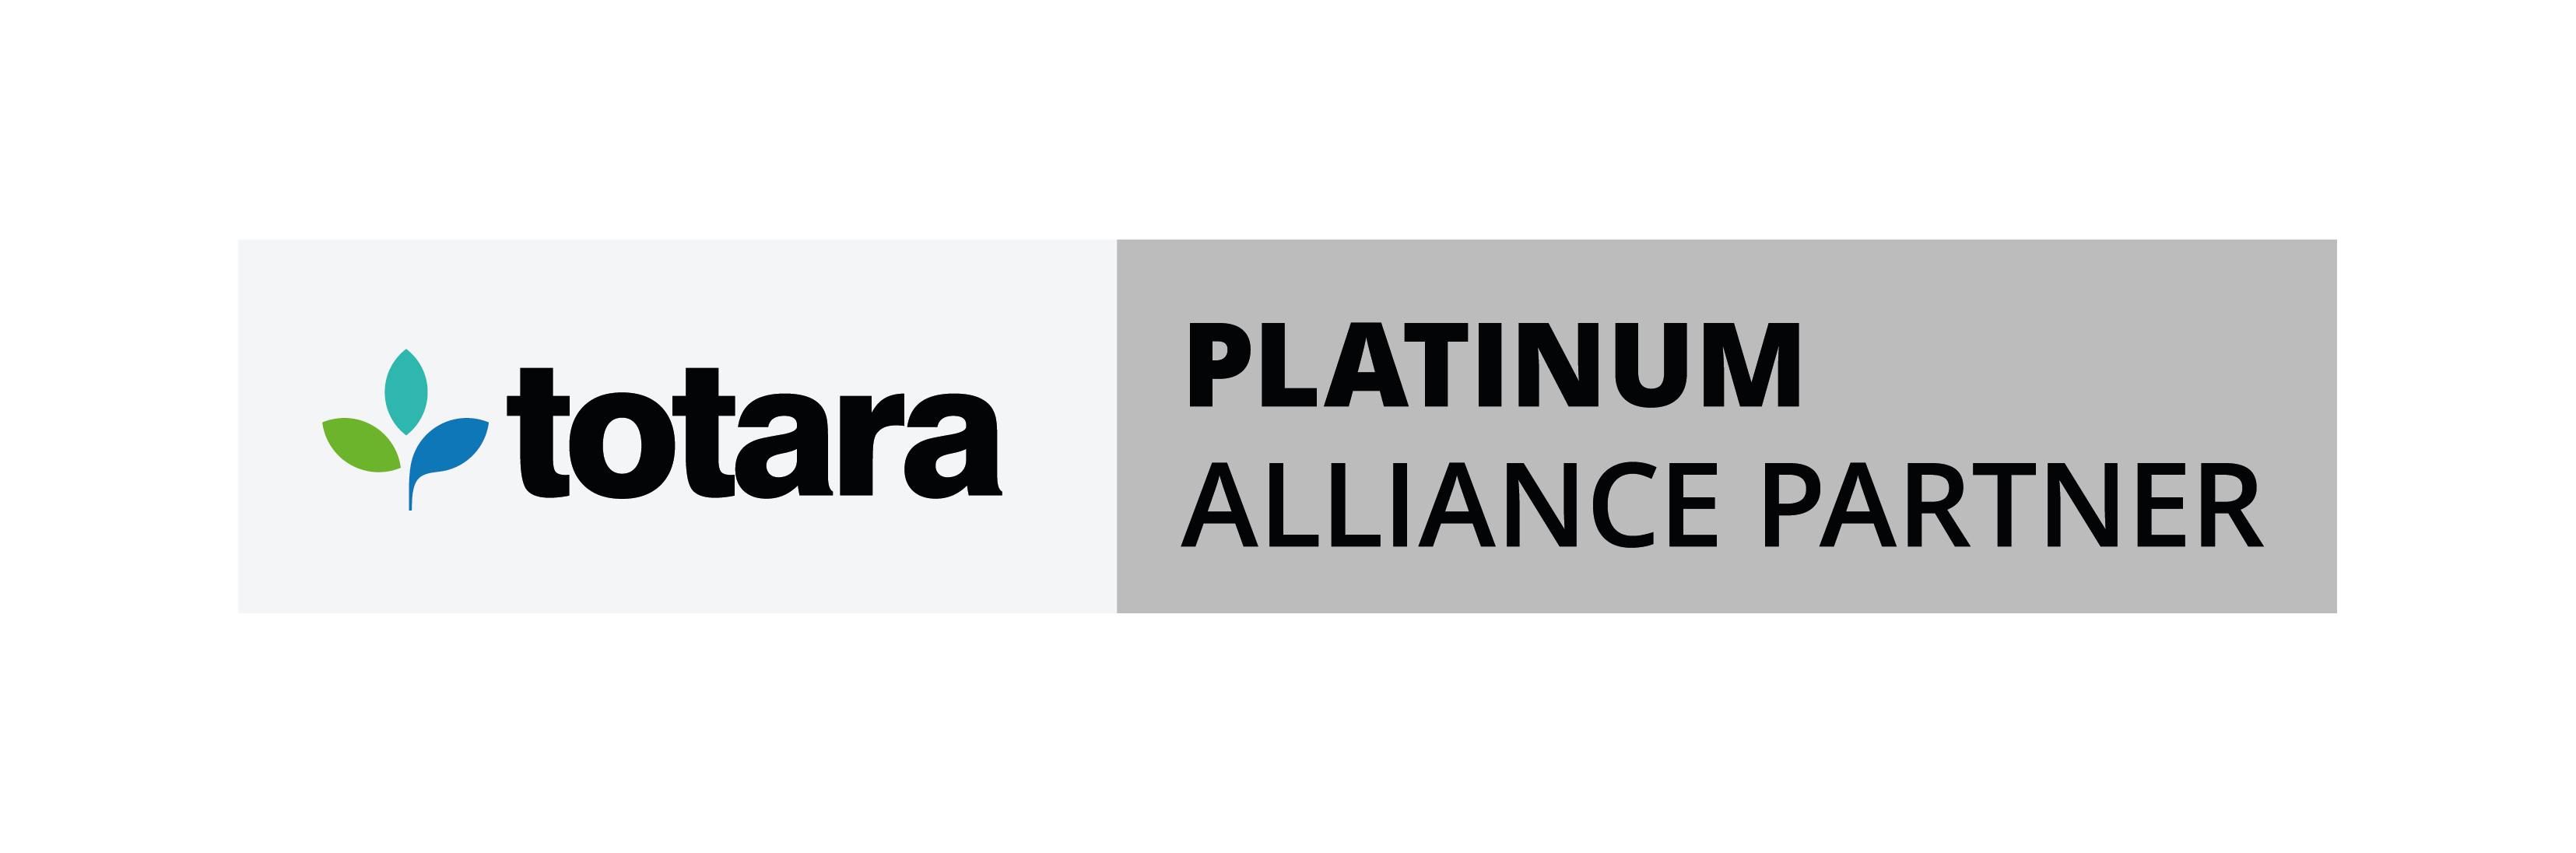 Totara Platinum Alliance Partner logo